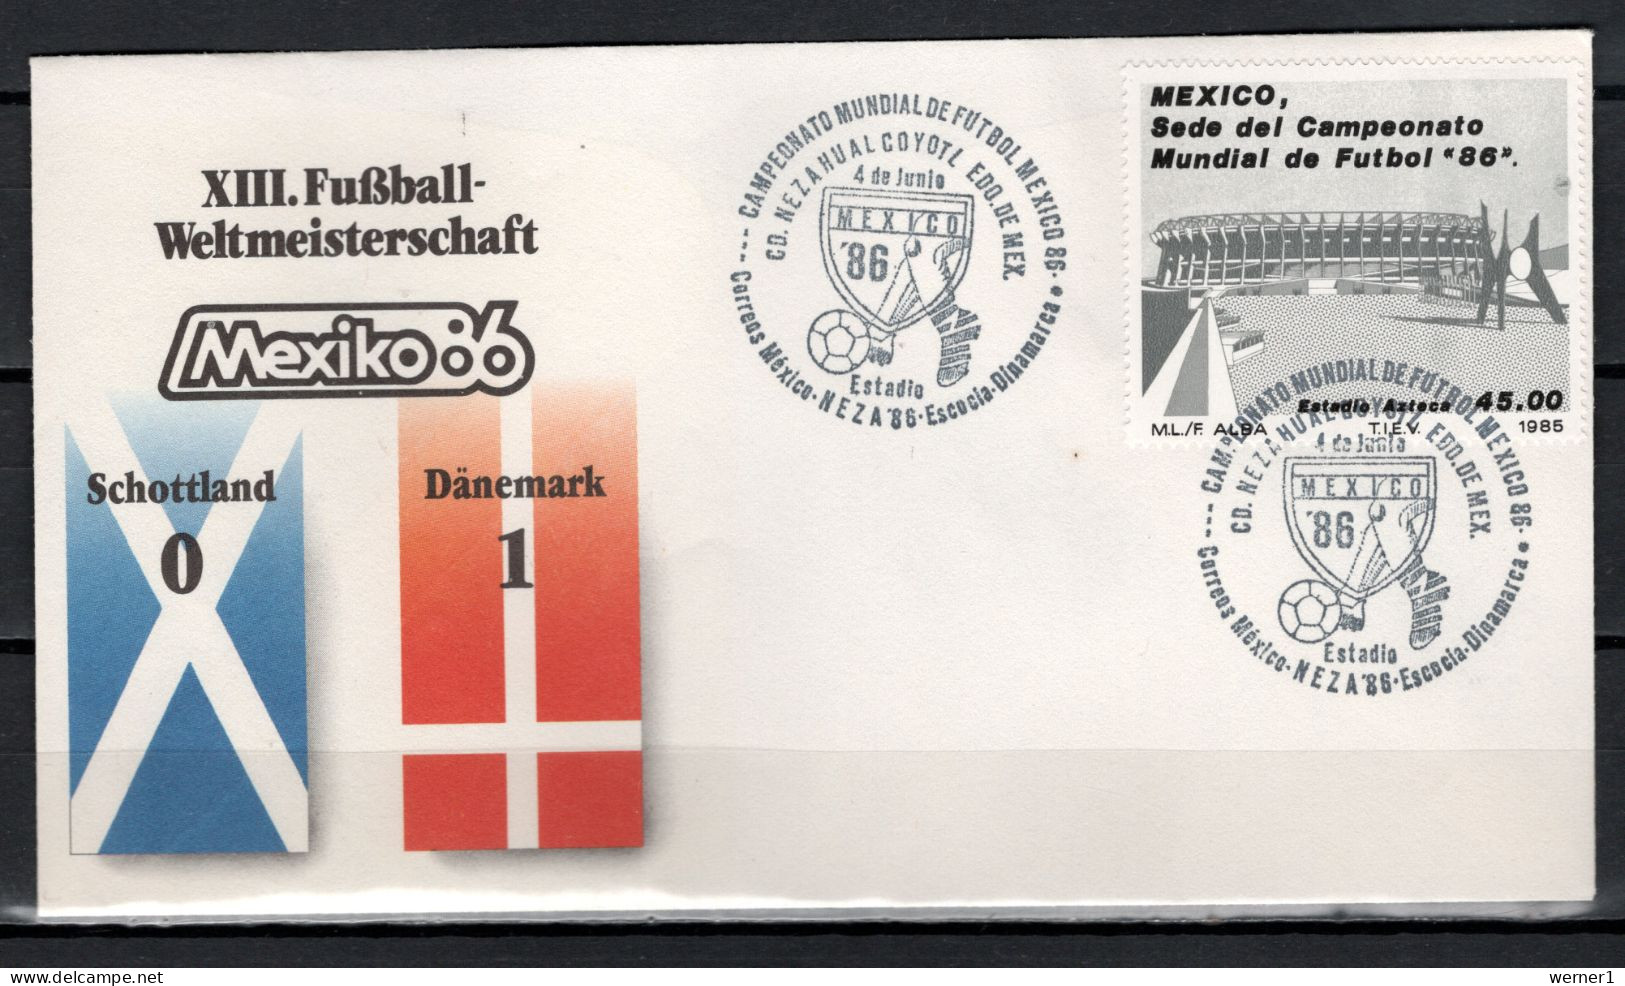 Mexico 1986 Football Soccer World Cup Commemorative Cover Match Scotland - Denmark 0 : 1 - 1986 – Messico